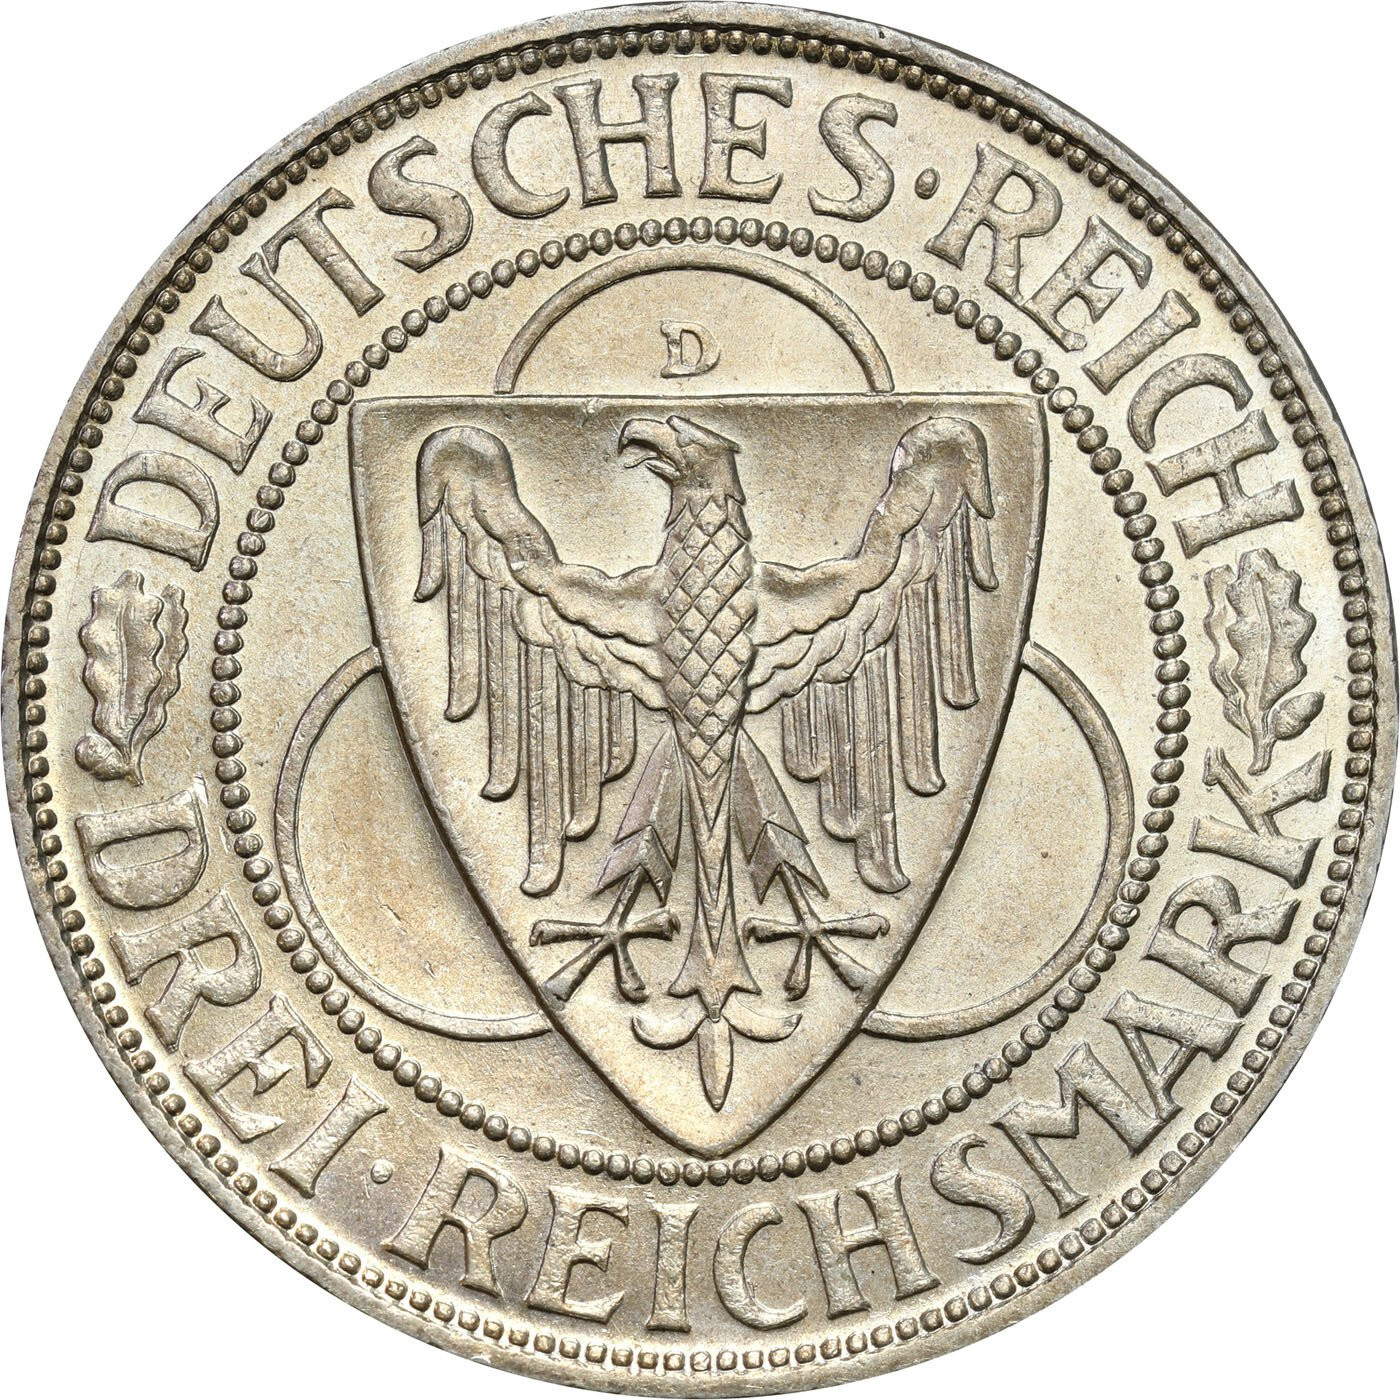 Niemcy, Weimar. 3 marki 1930 D, Monachium - PIĘKNE